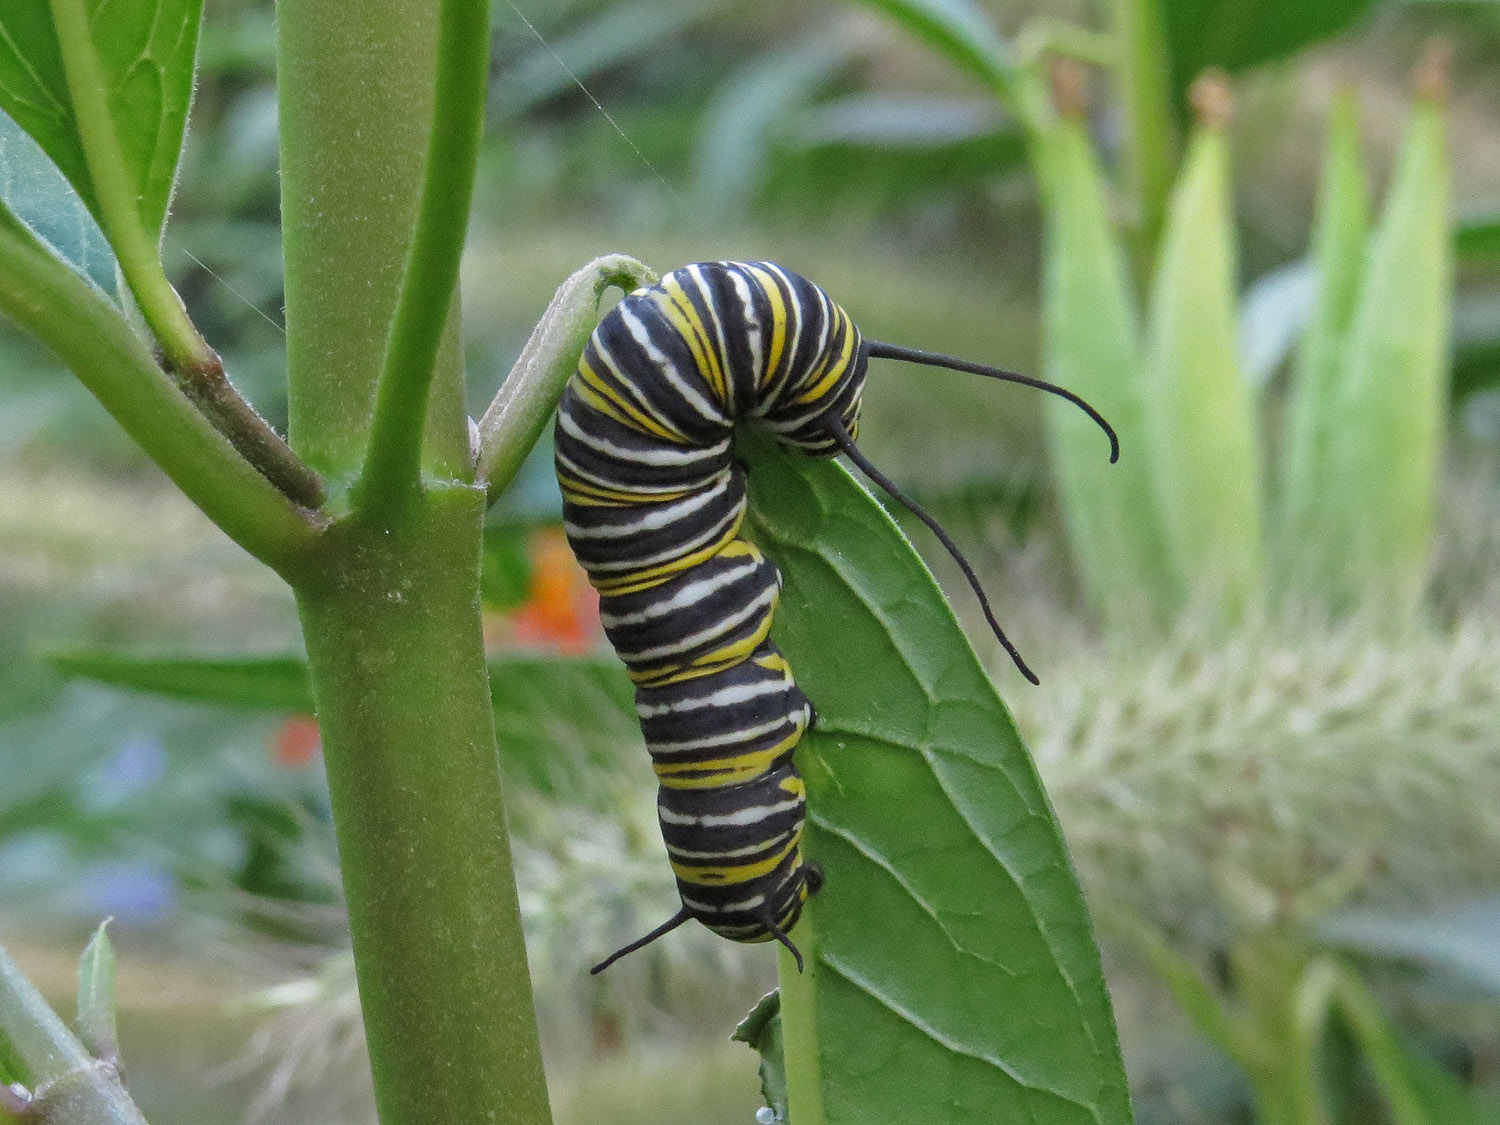 Caterpillar 1500 8-31-2016 153P.jpg